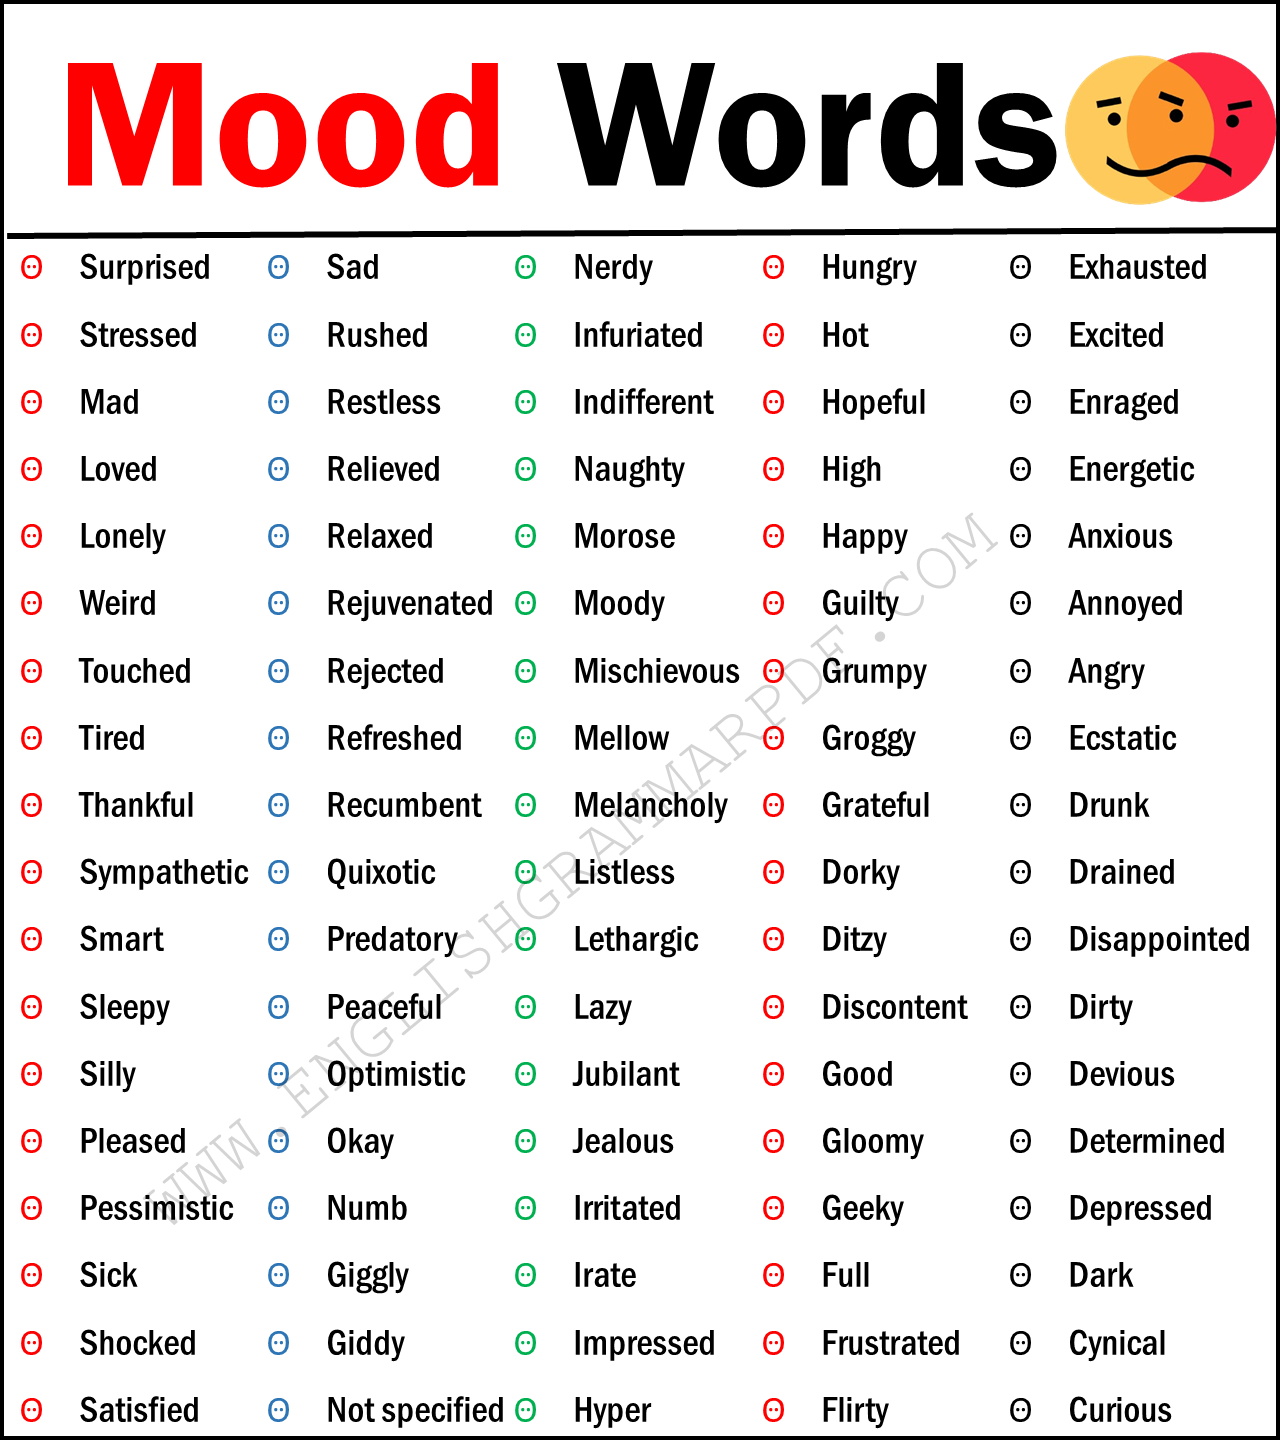 Mood Words